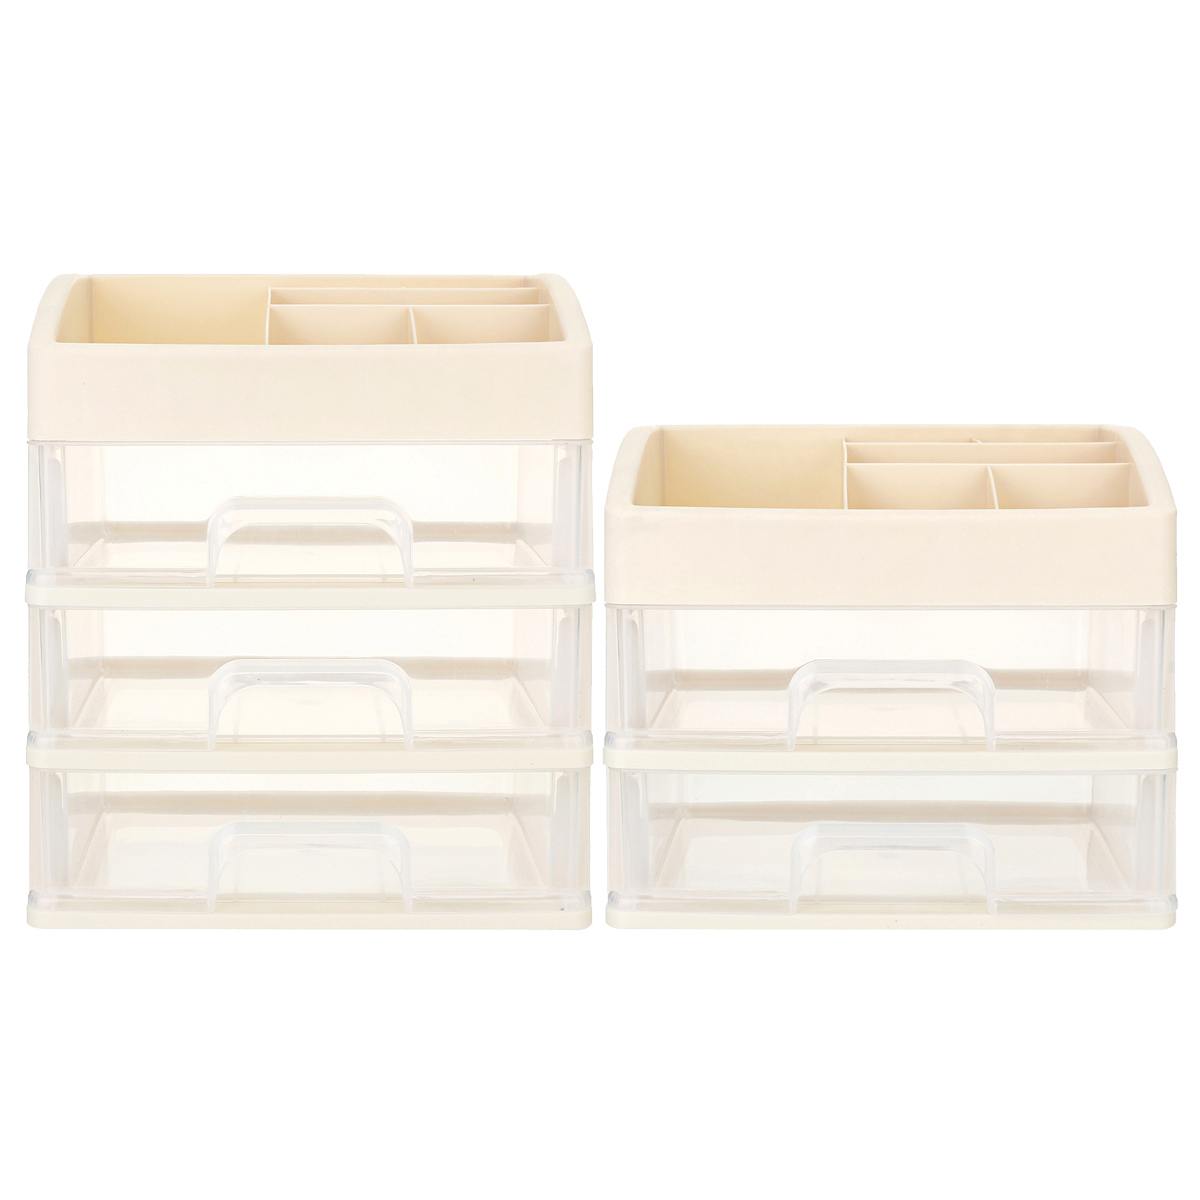 123-Layers-Plastic-Desktop-Organizer-Drawer-Makeup-Holder-Box-Make-Sundry-Storage-Box-Container-1451646-4